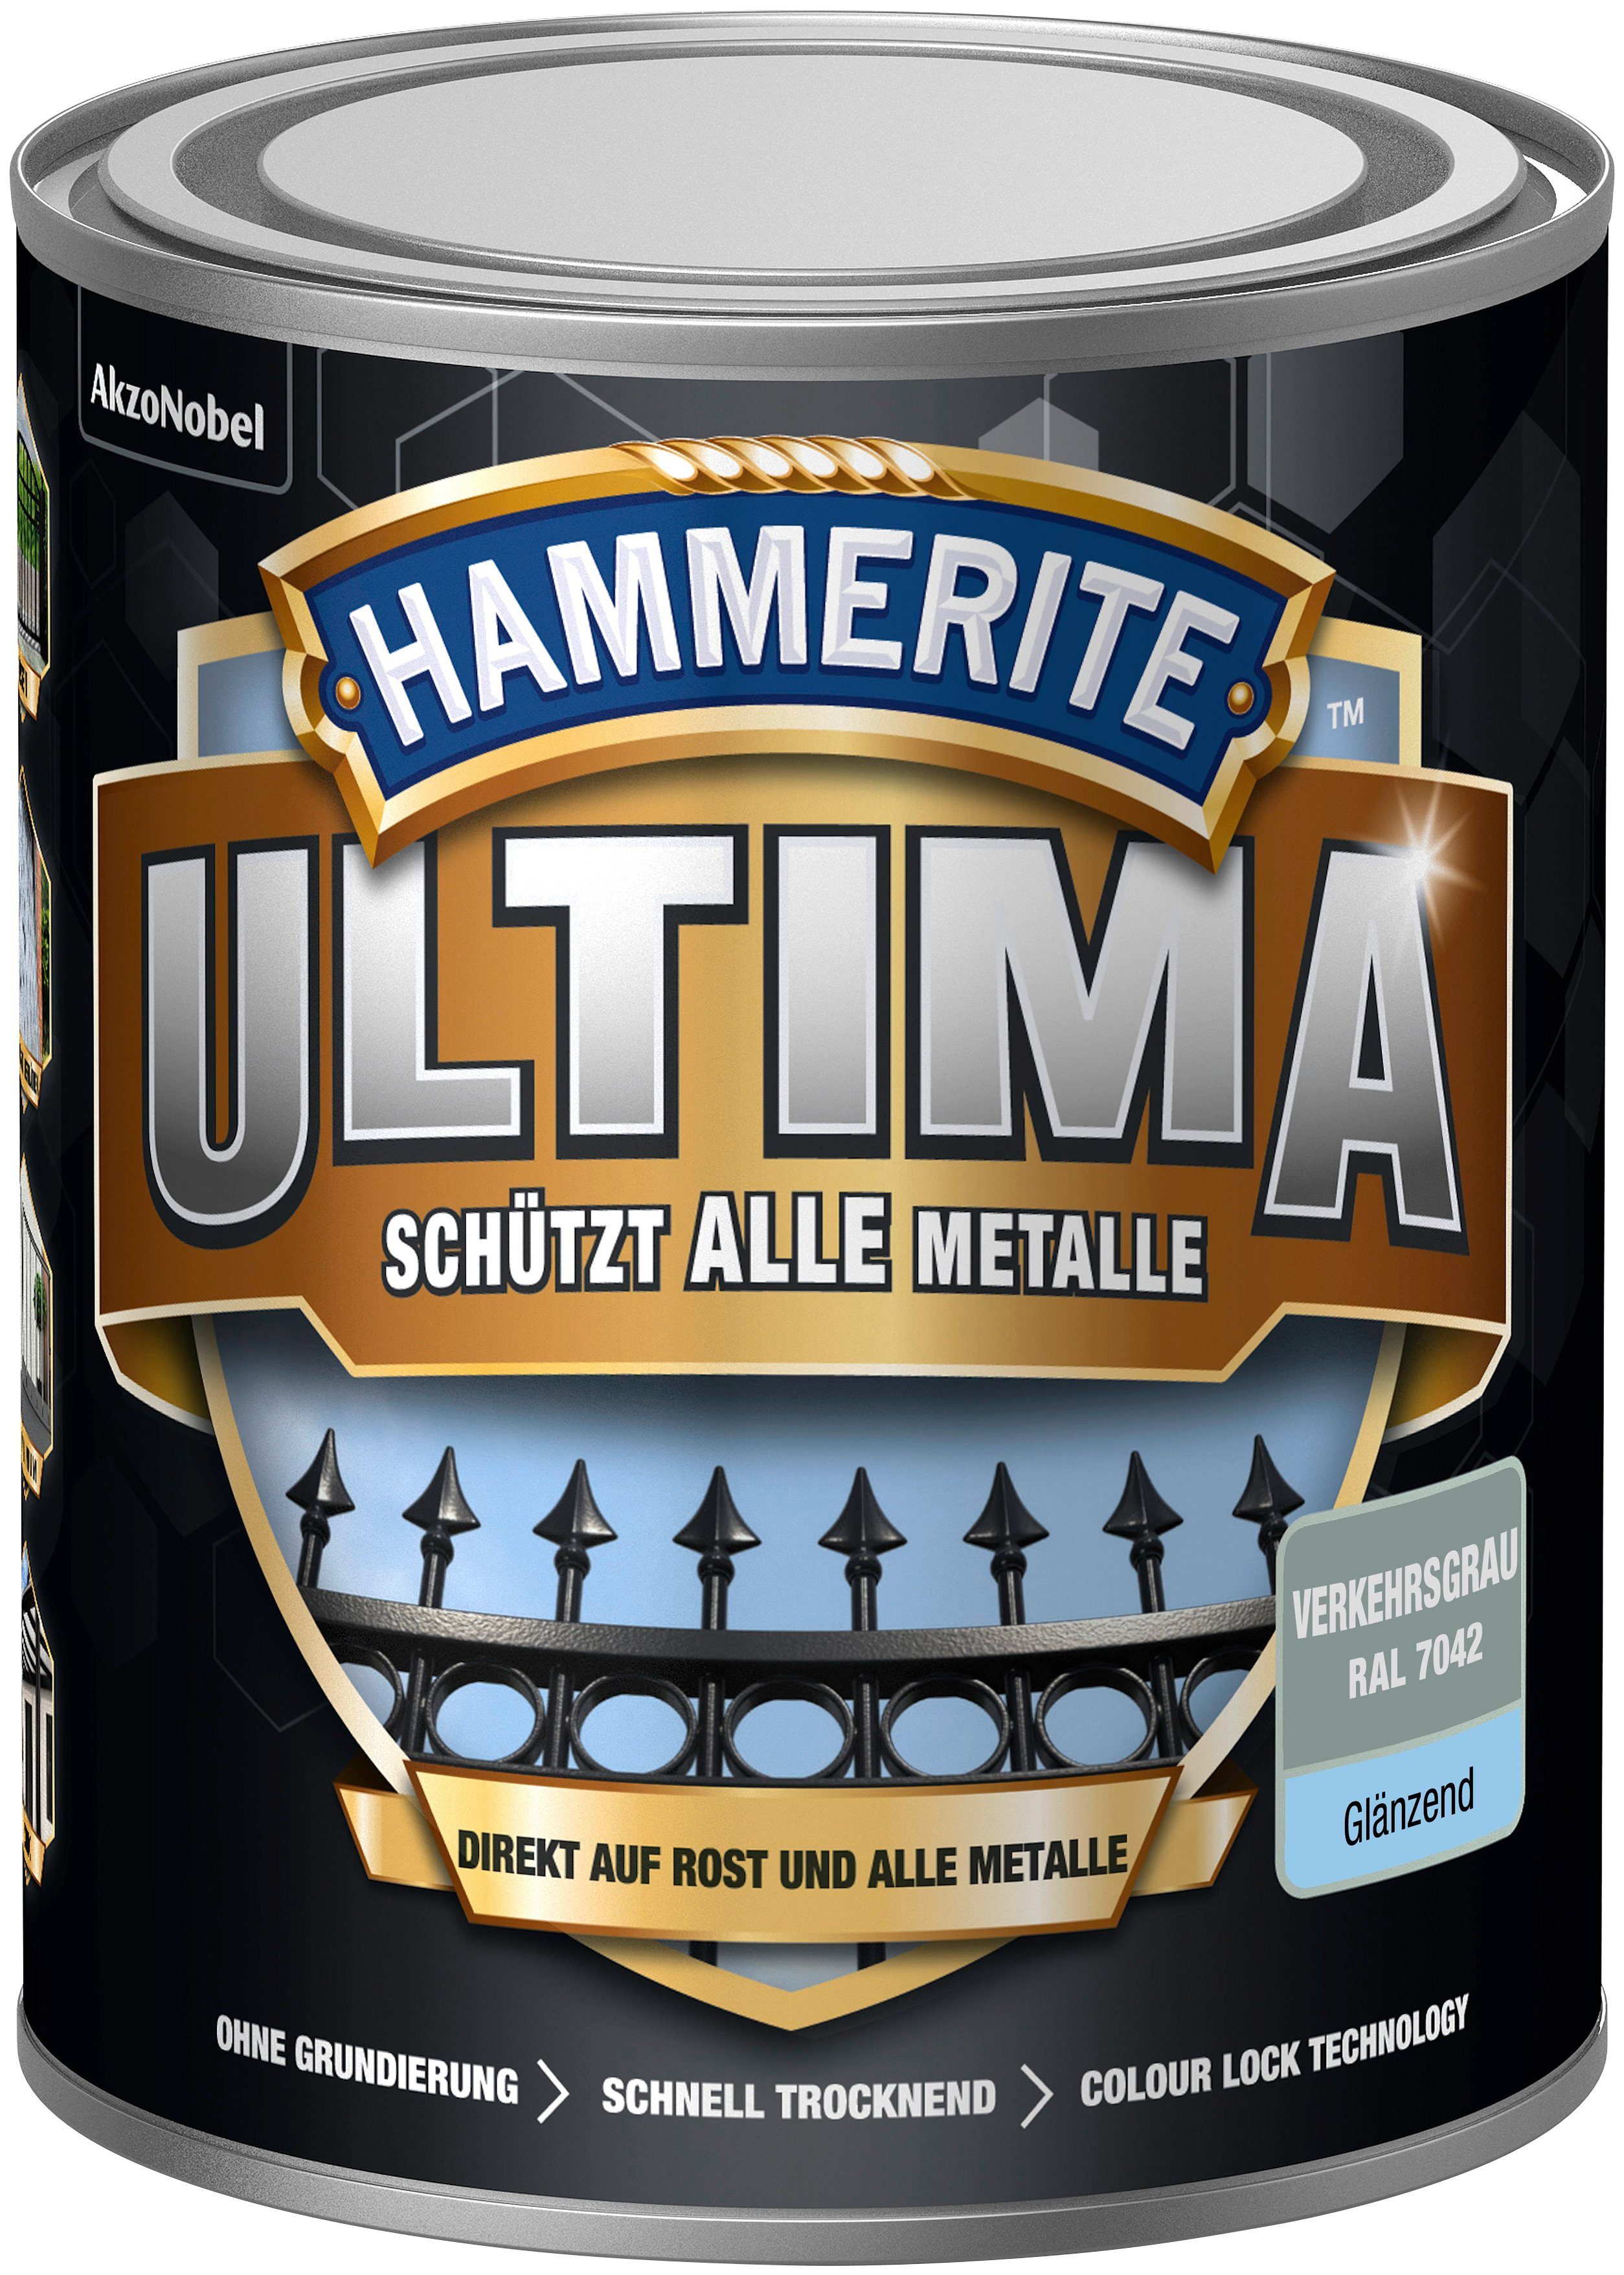 Hammerite  Metallschutzlack ULTIMA schützt alle Metalle, 3in1, verkehrsgrau RAL7042, glänzend verkehrsgrau RAL 7042 glänzend